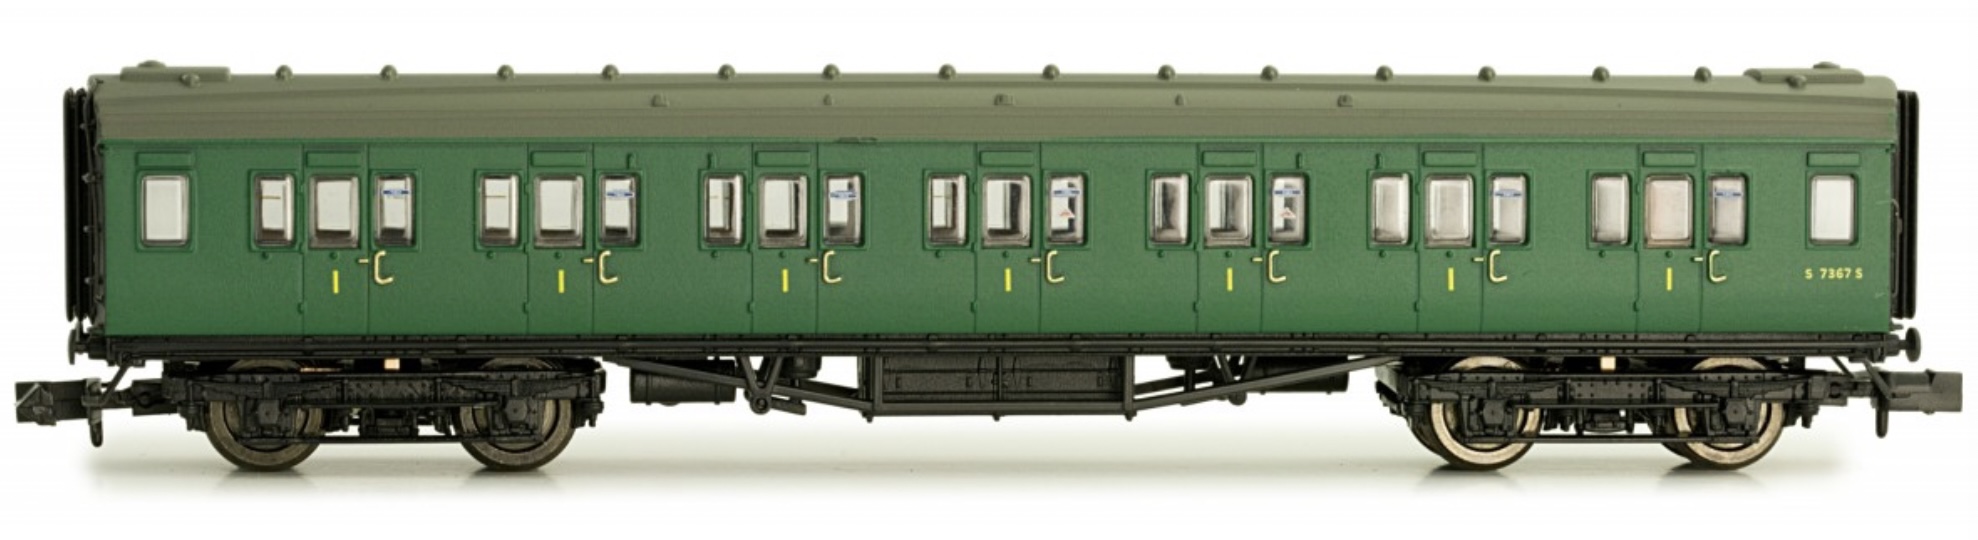 N Scale - Dapol - 2P-012-304 - Passenger Car, Coach, Maunsell, 1st Class - Southern (UK) - 7367